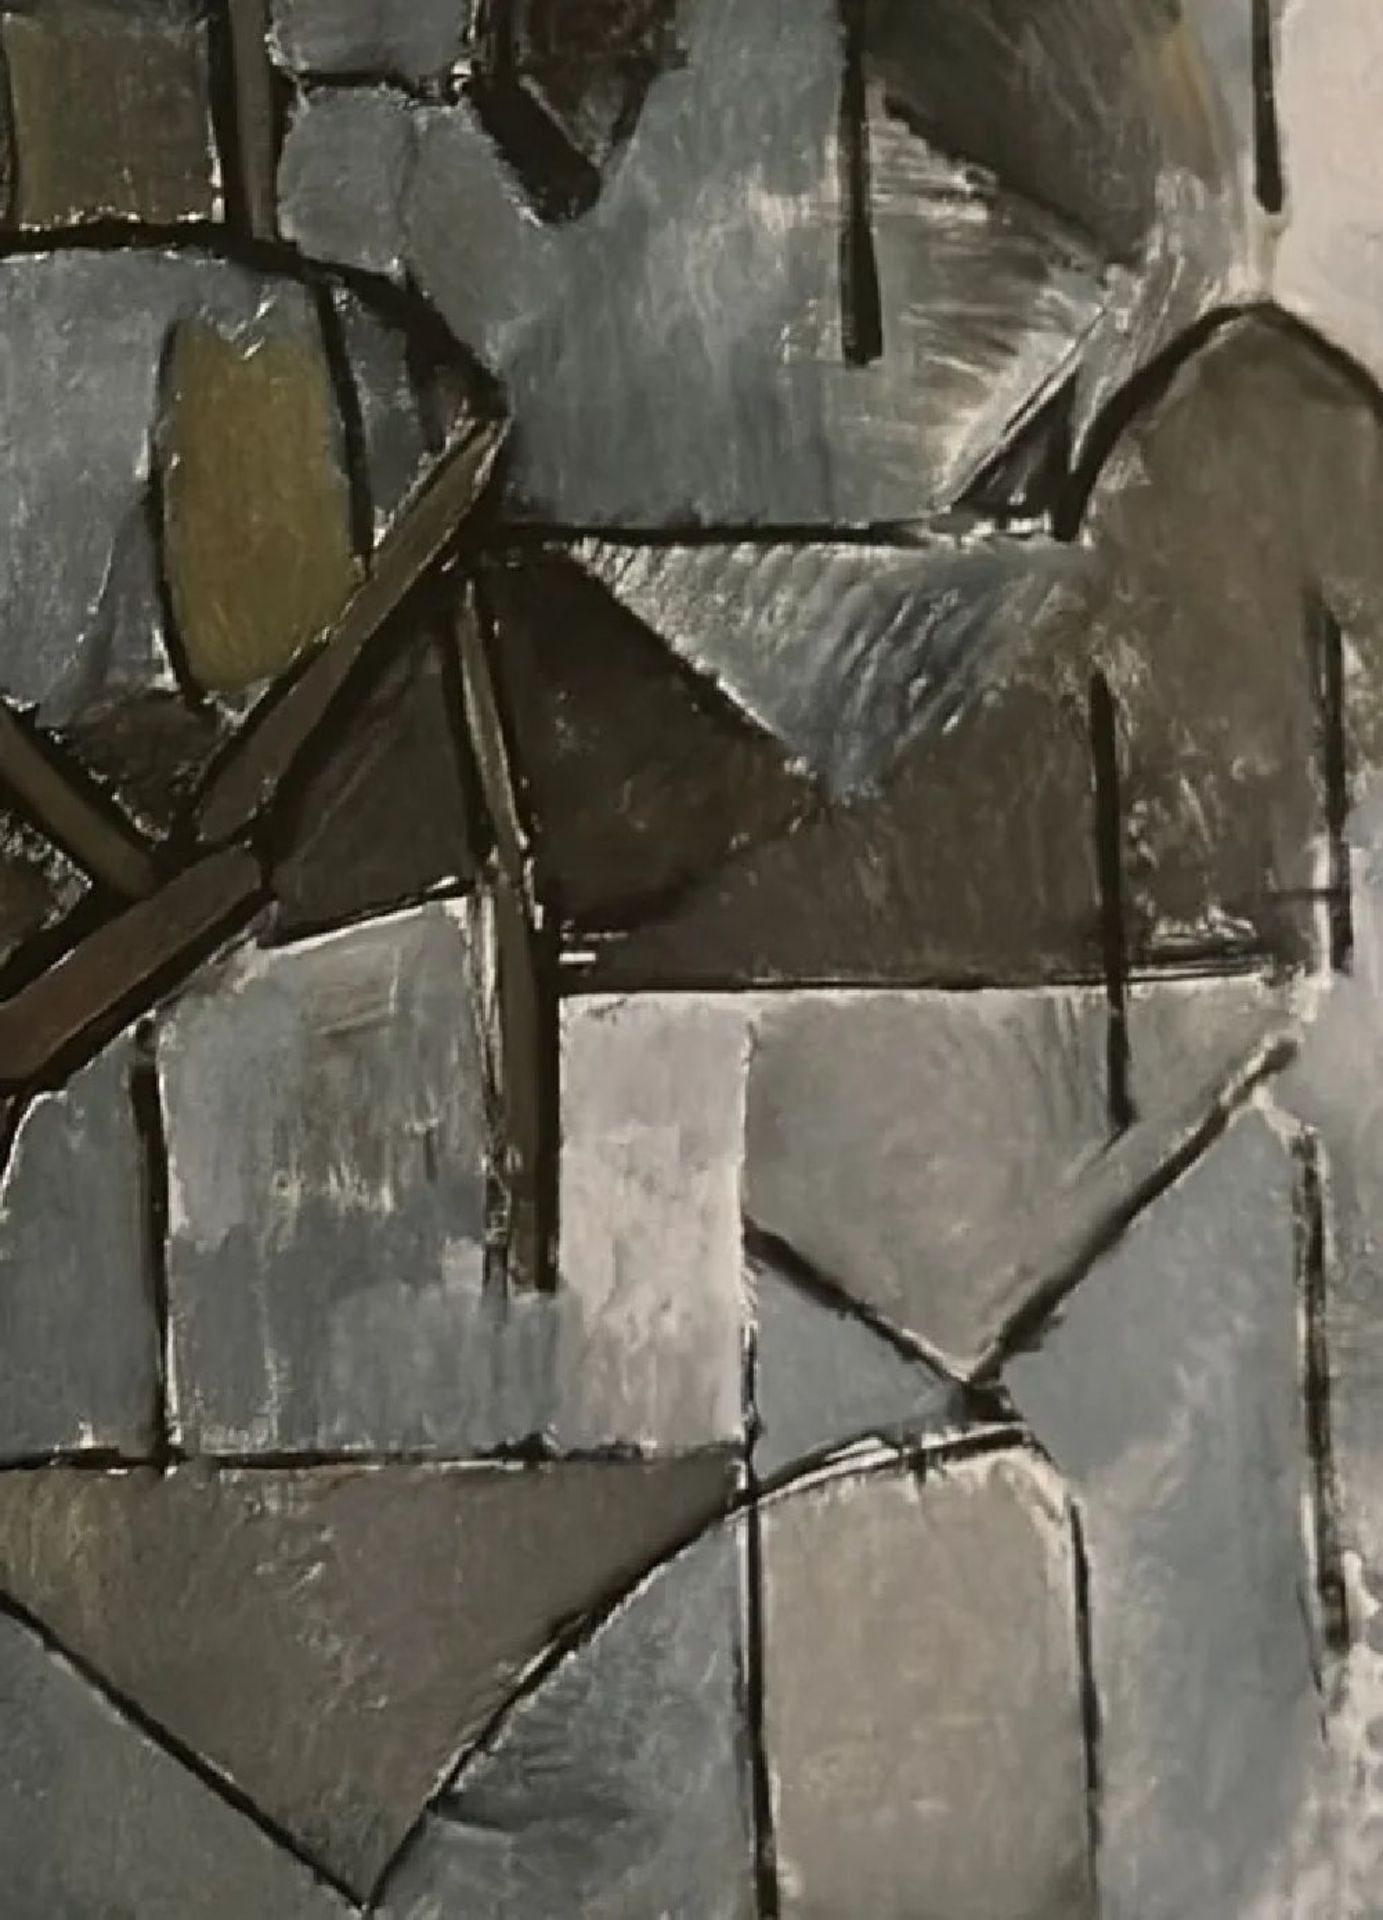 Piet Mondrian "Composition" Pin - Image 5 of 6